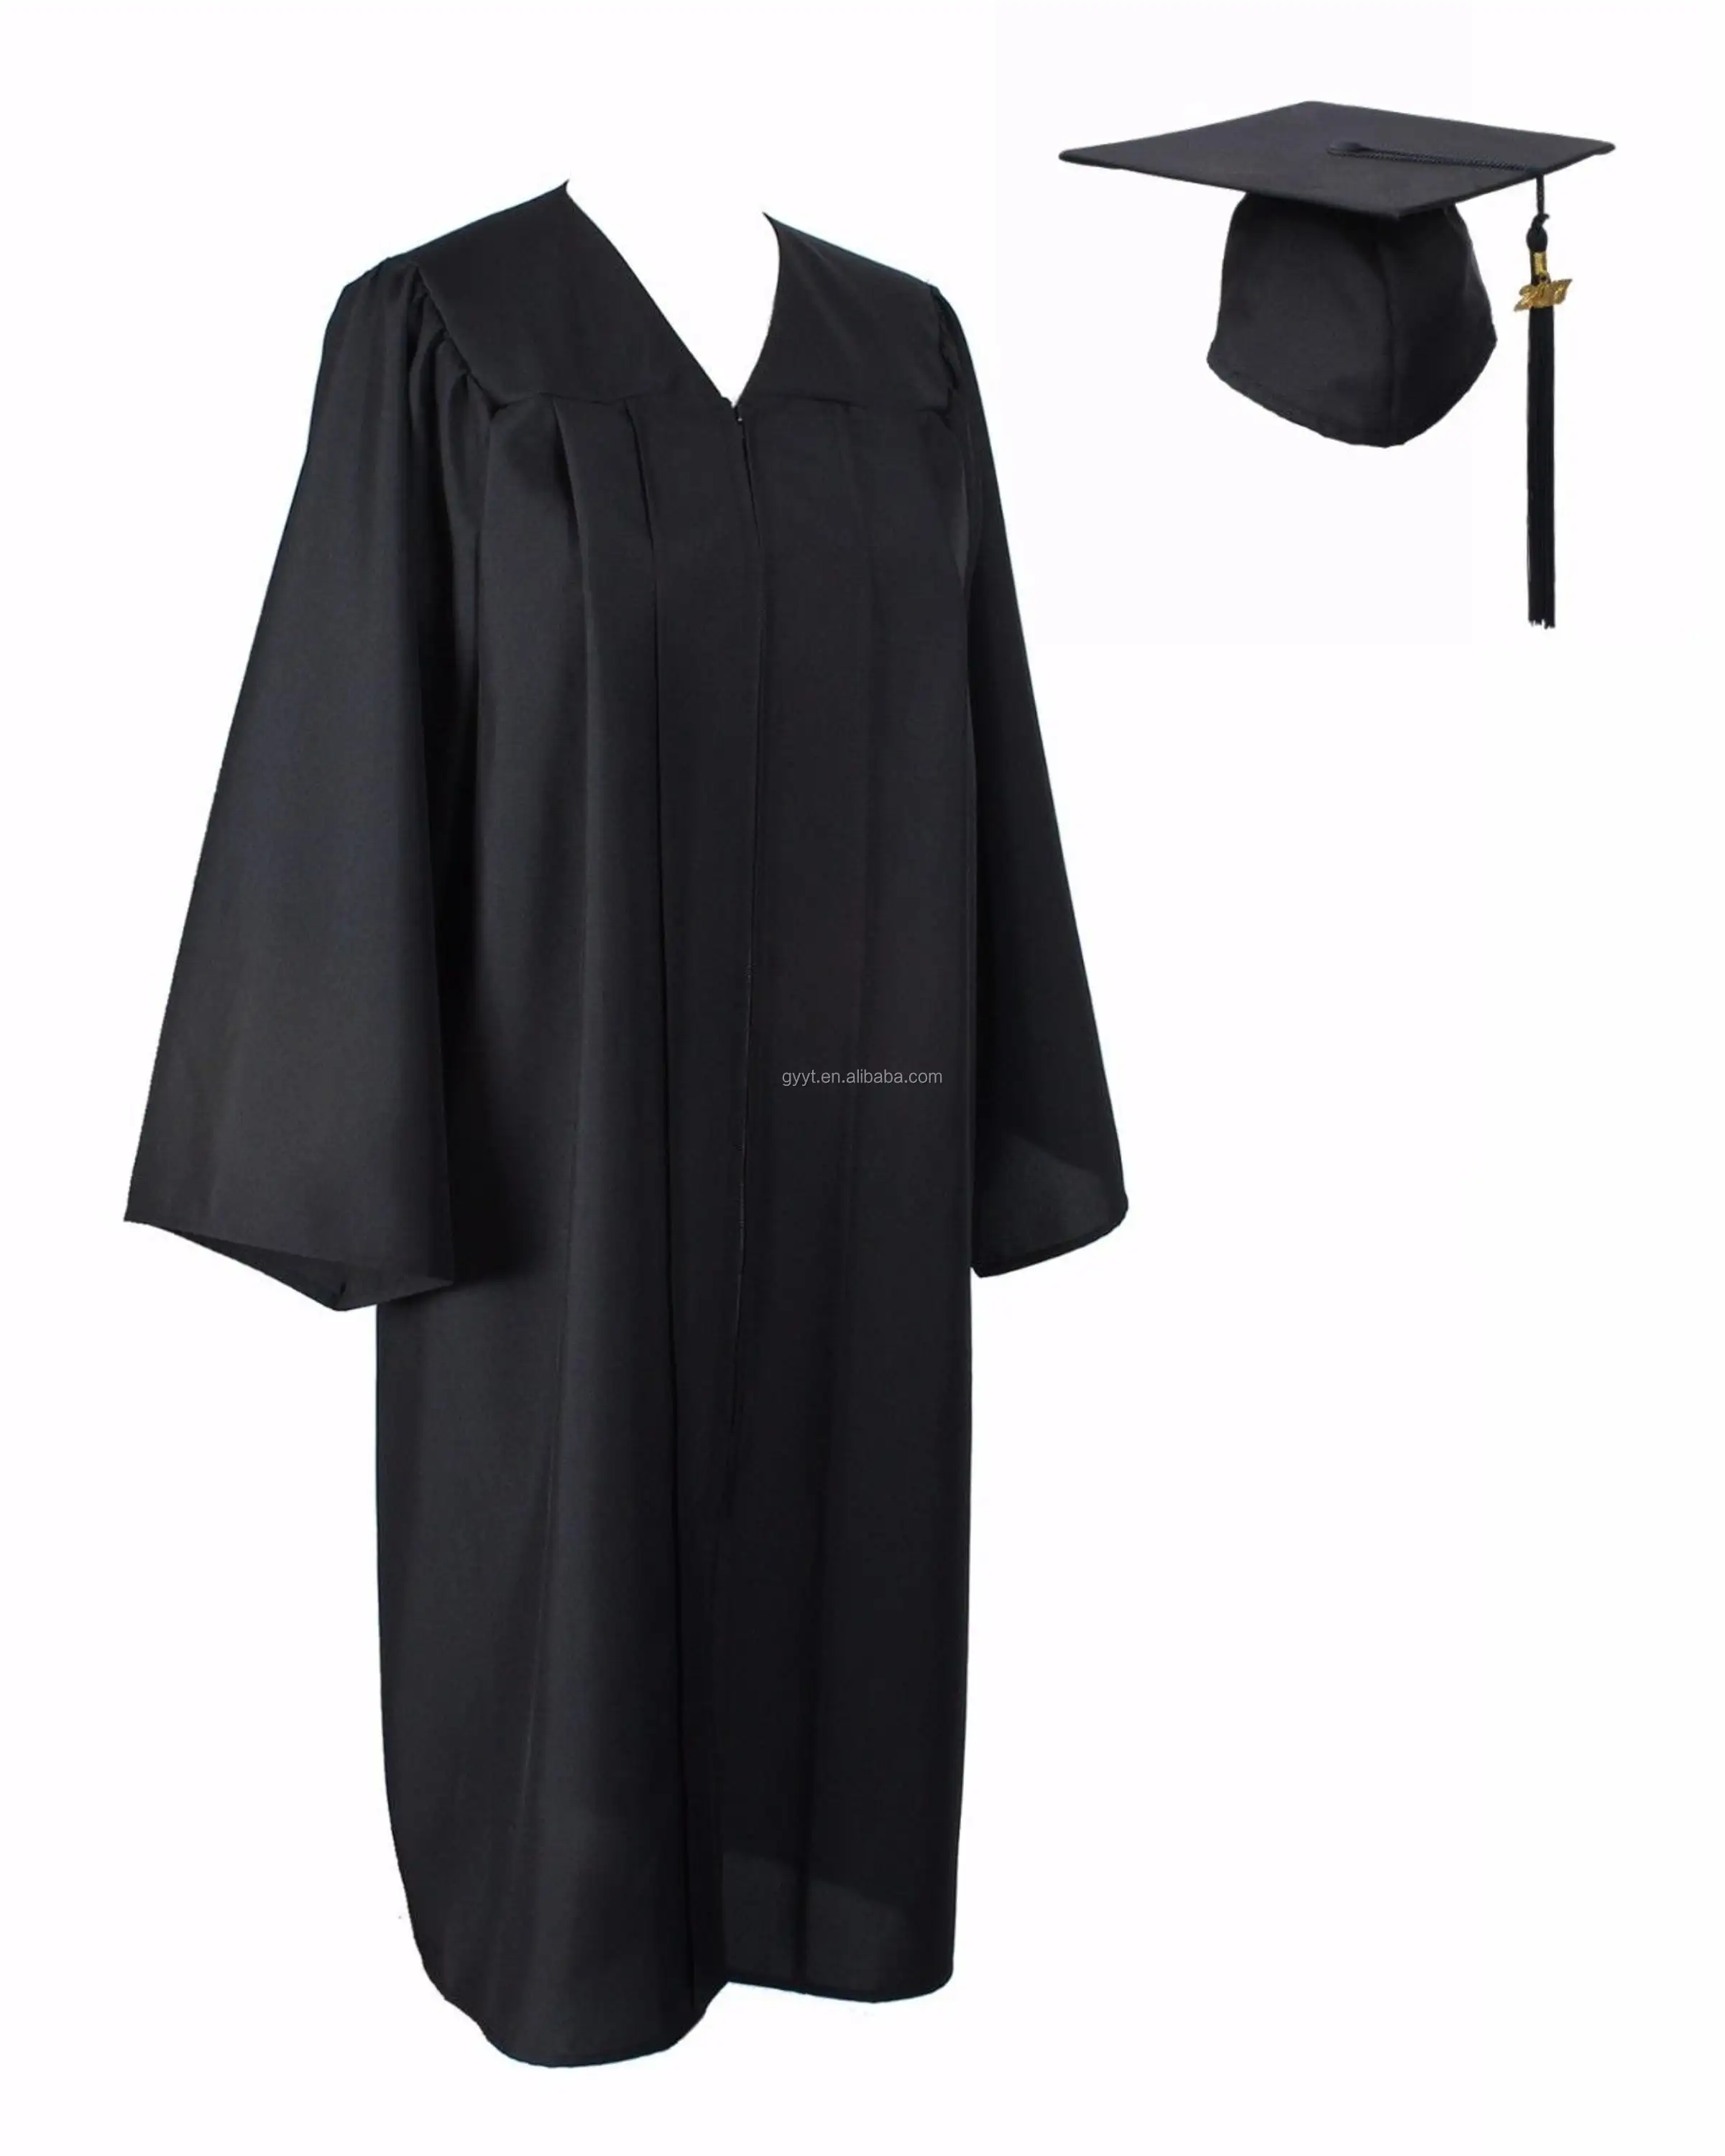 Black Bachelor of Clothes Academic Gown Graduation Dress Graduated Academic Dress